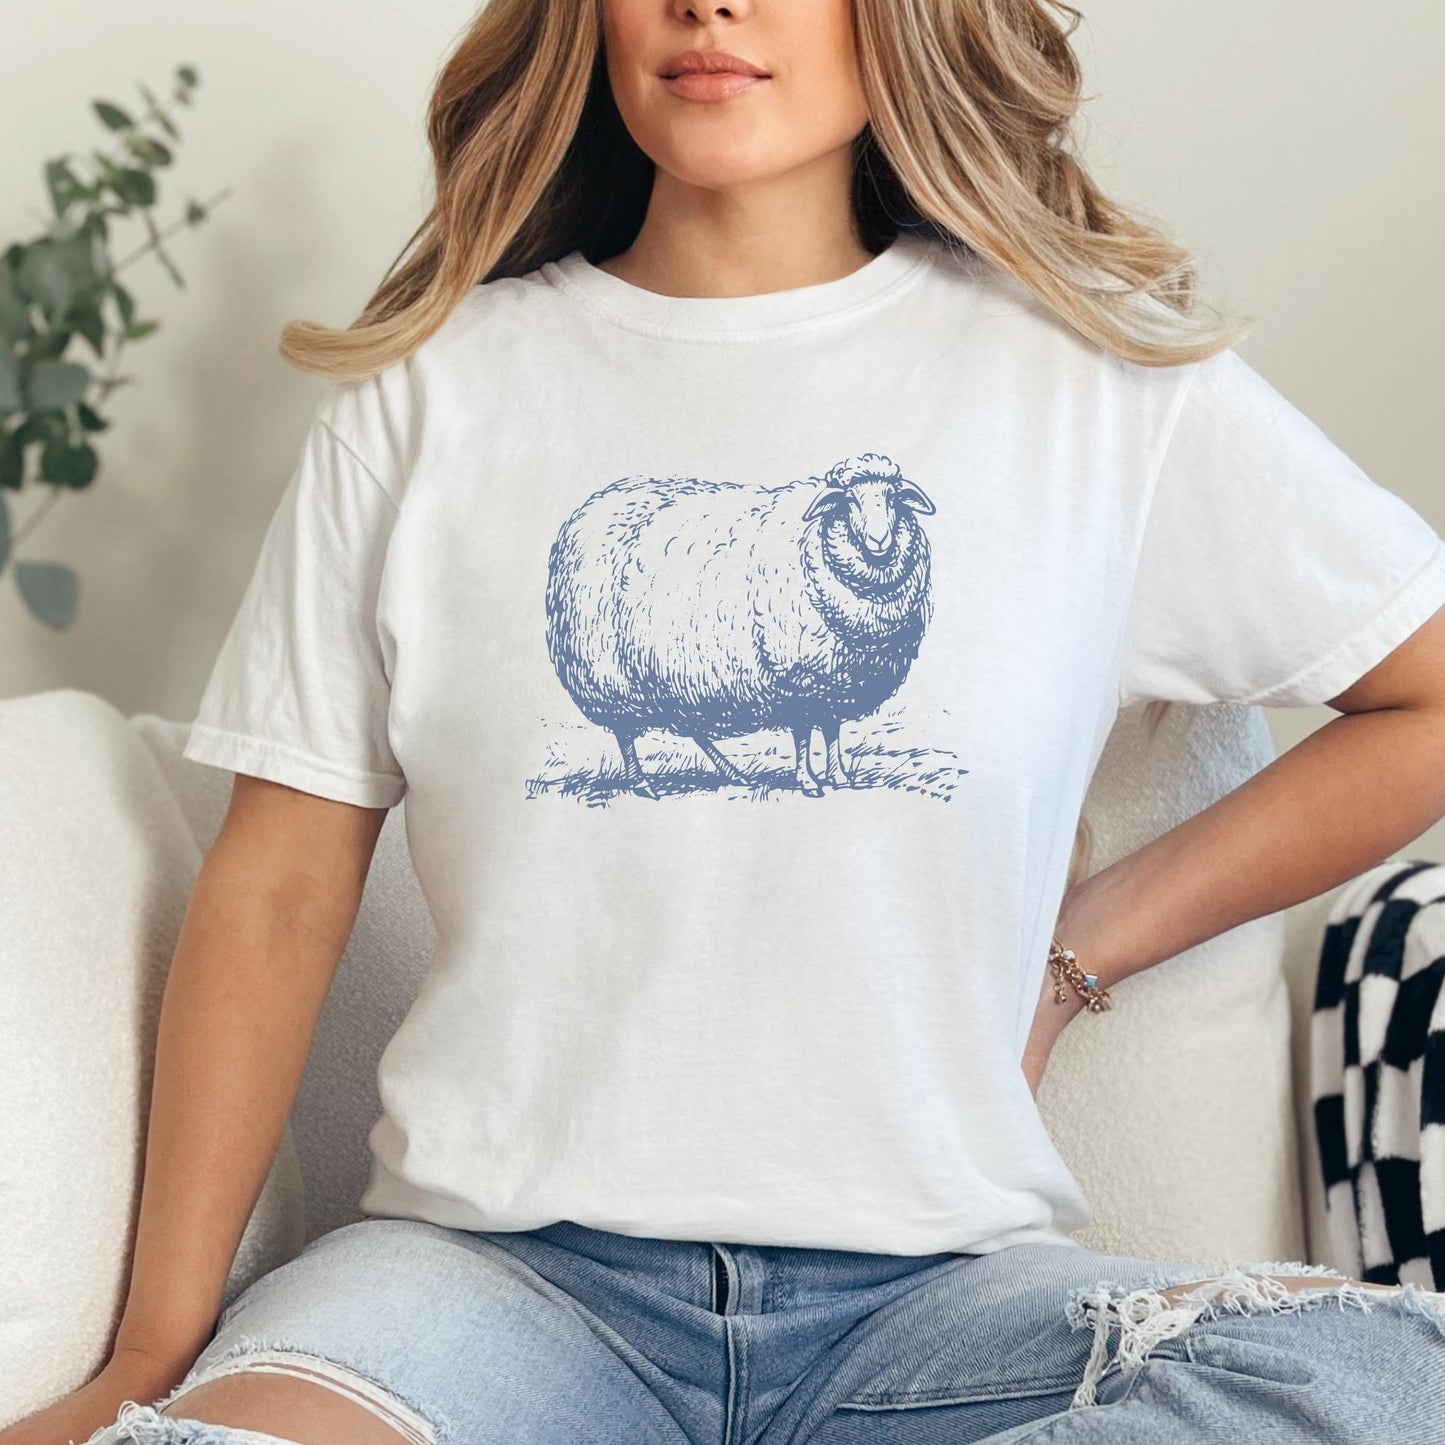 Fat Sheep T-Shirt, Vintage 90s Tattoo Fat Sheep Shirt